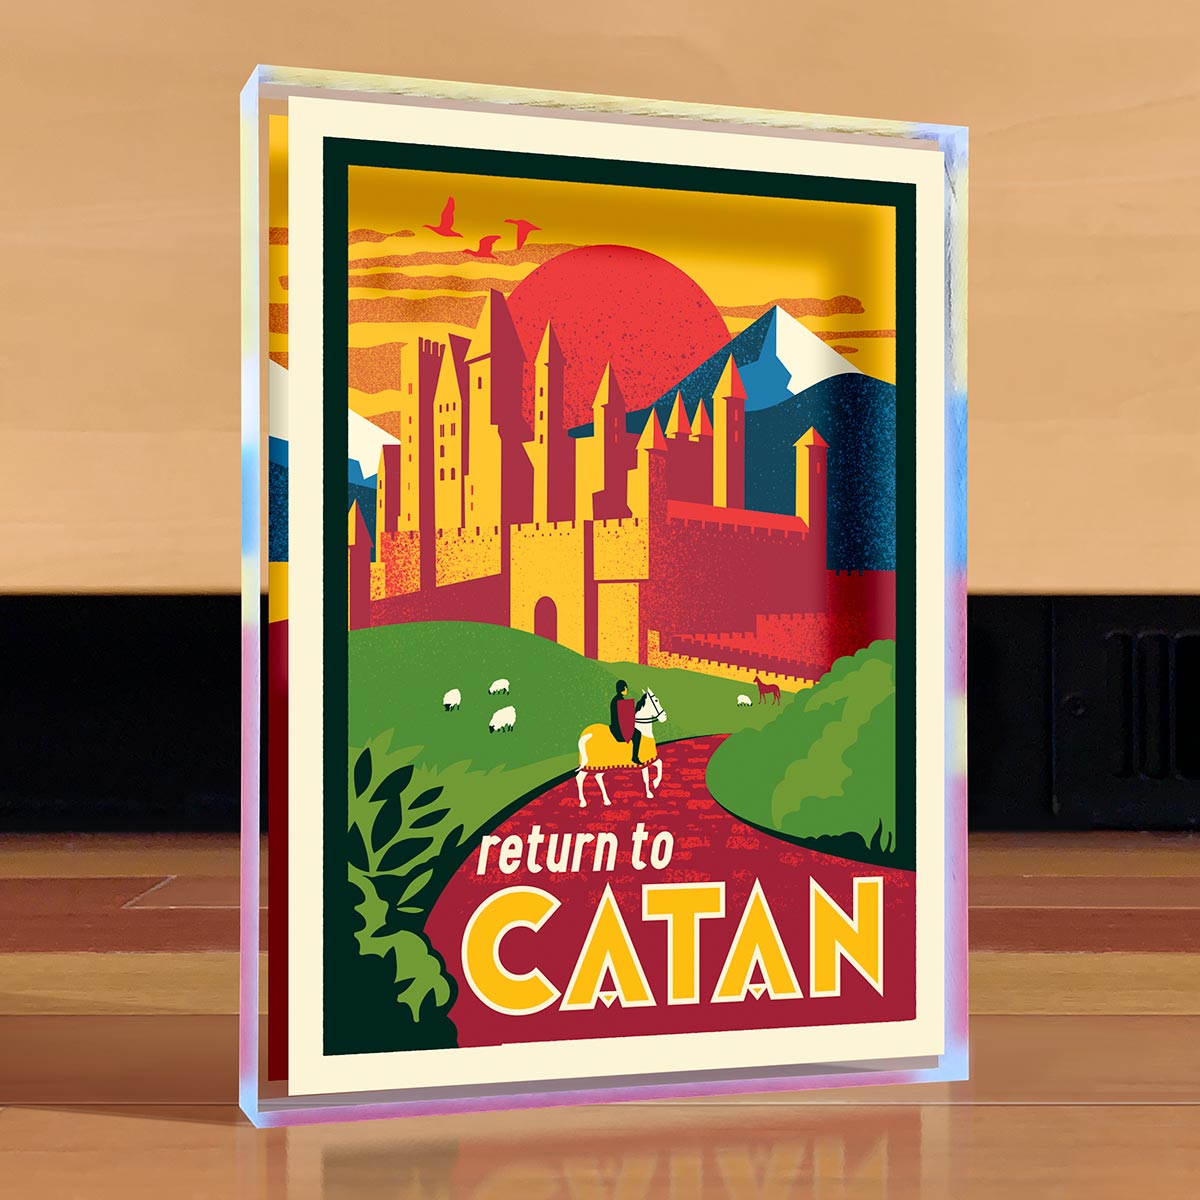 Return to CATAN: Cities & Knights Desktop Art